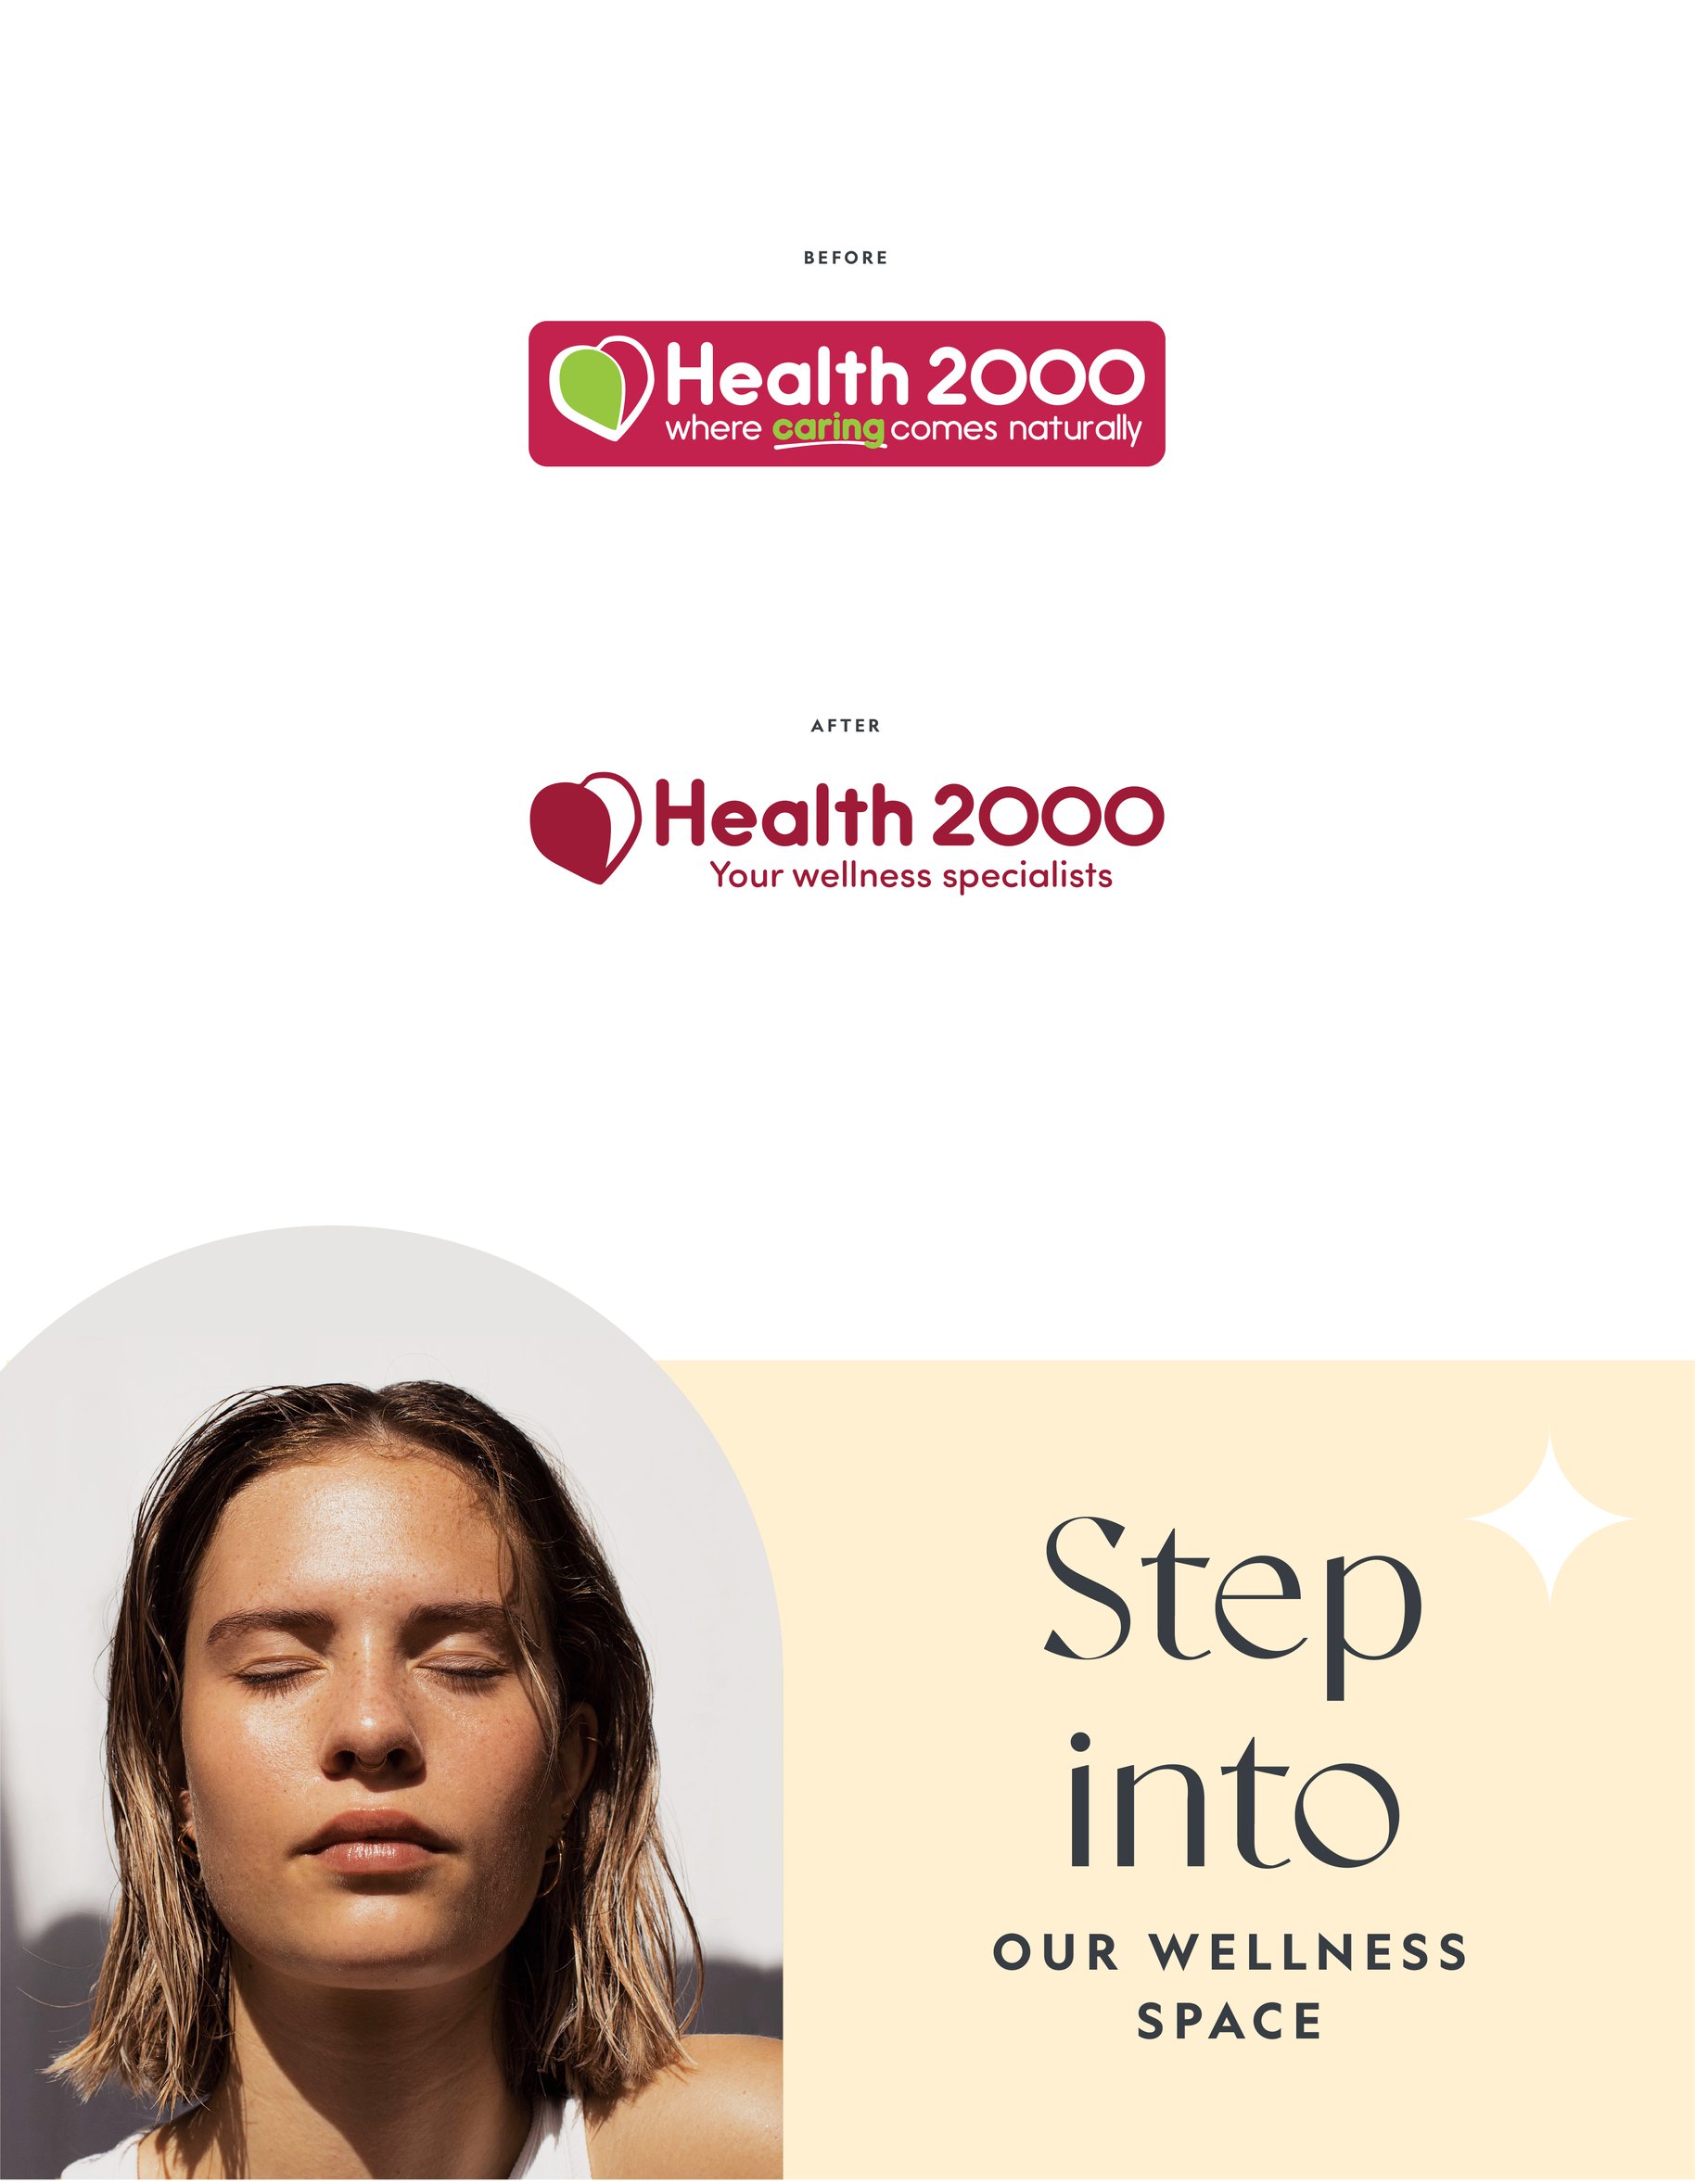 Health 2000 image